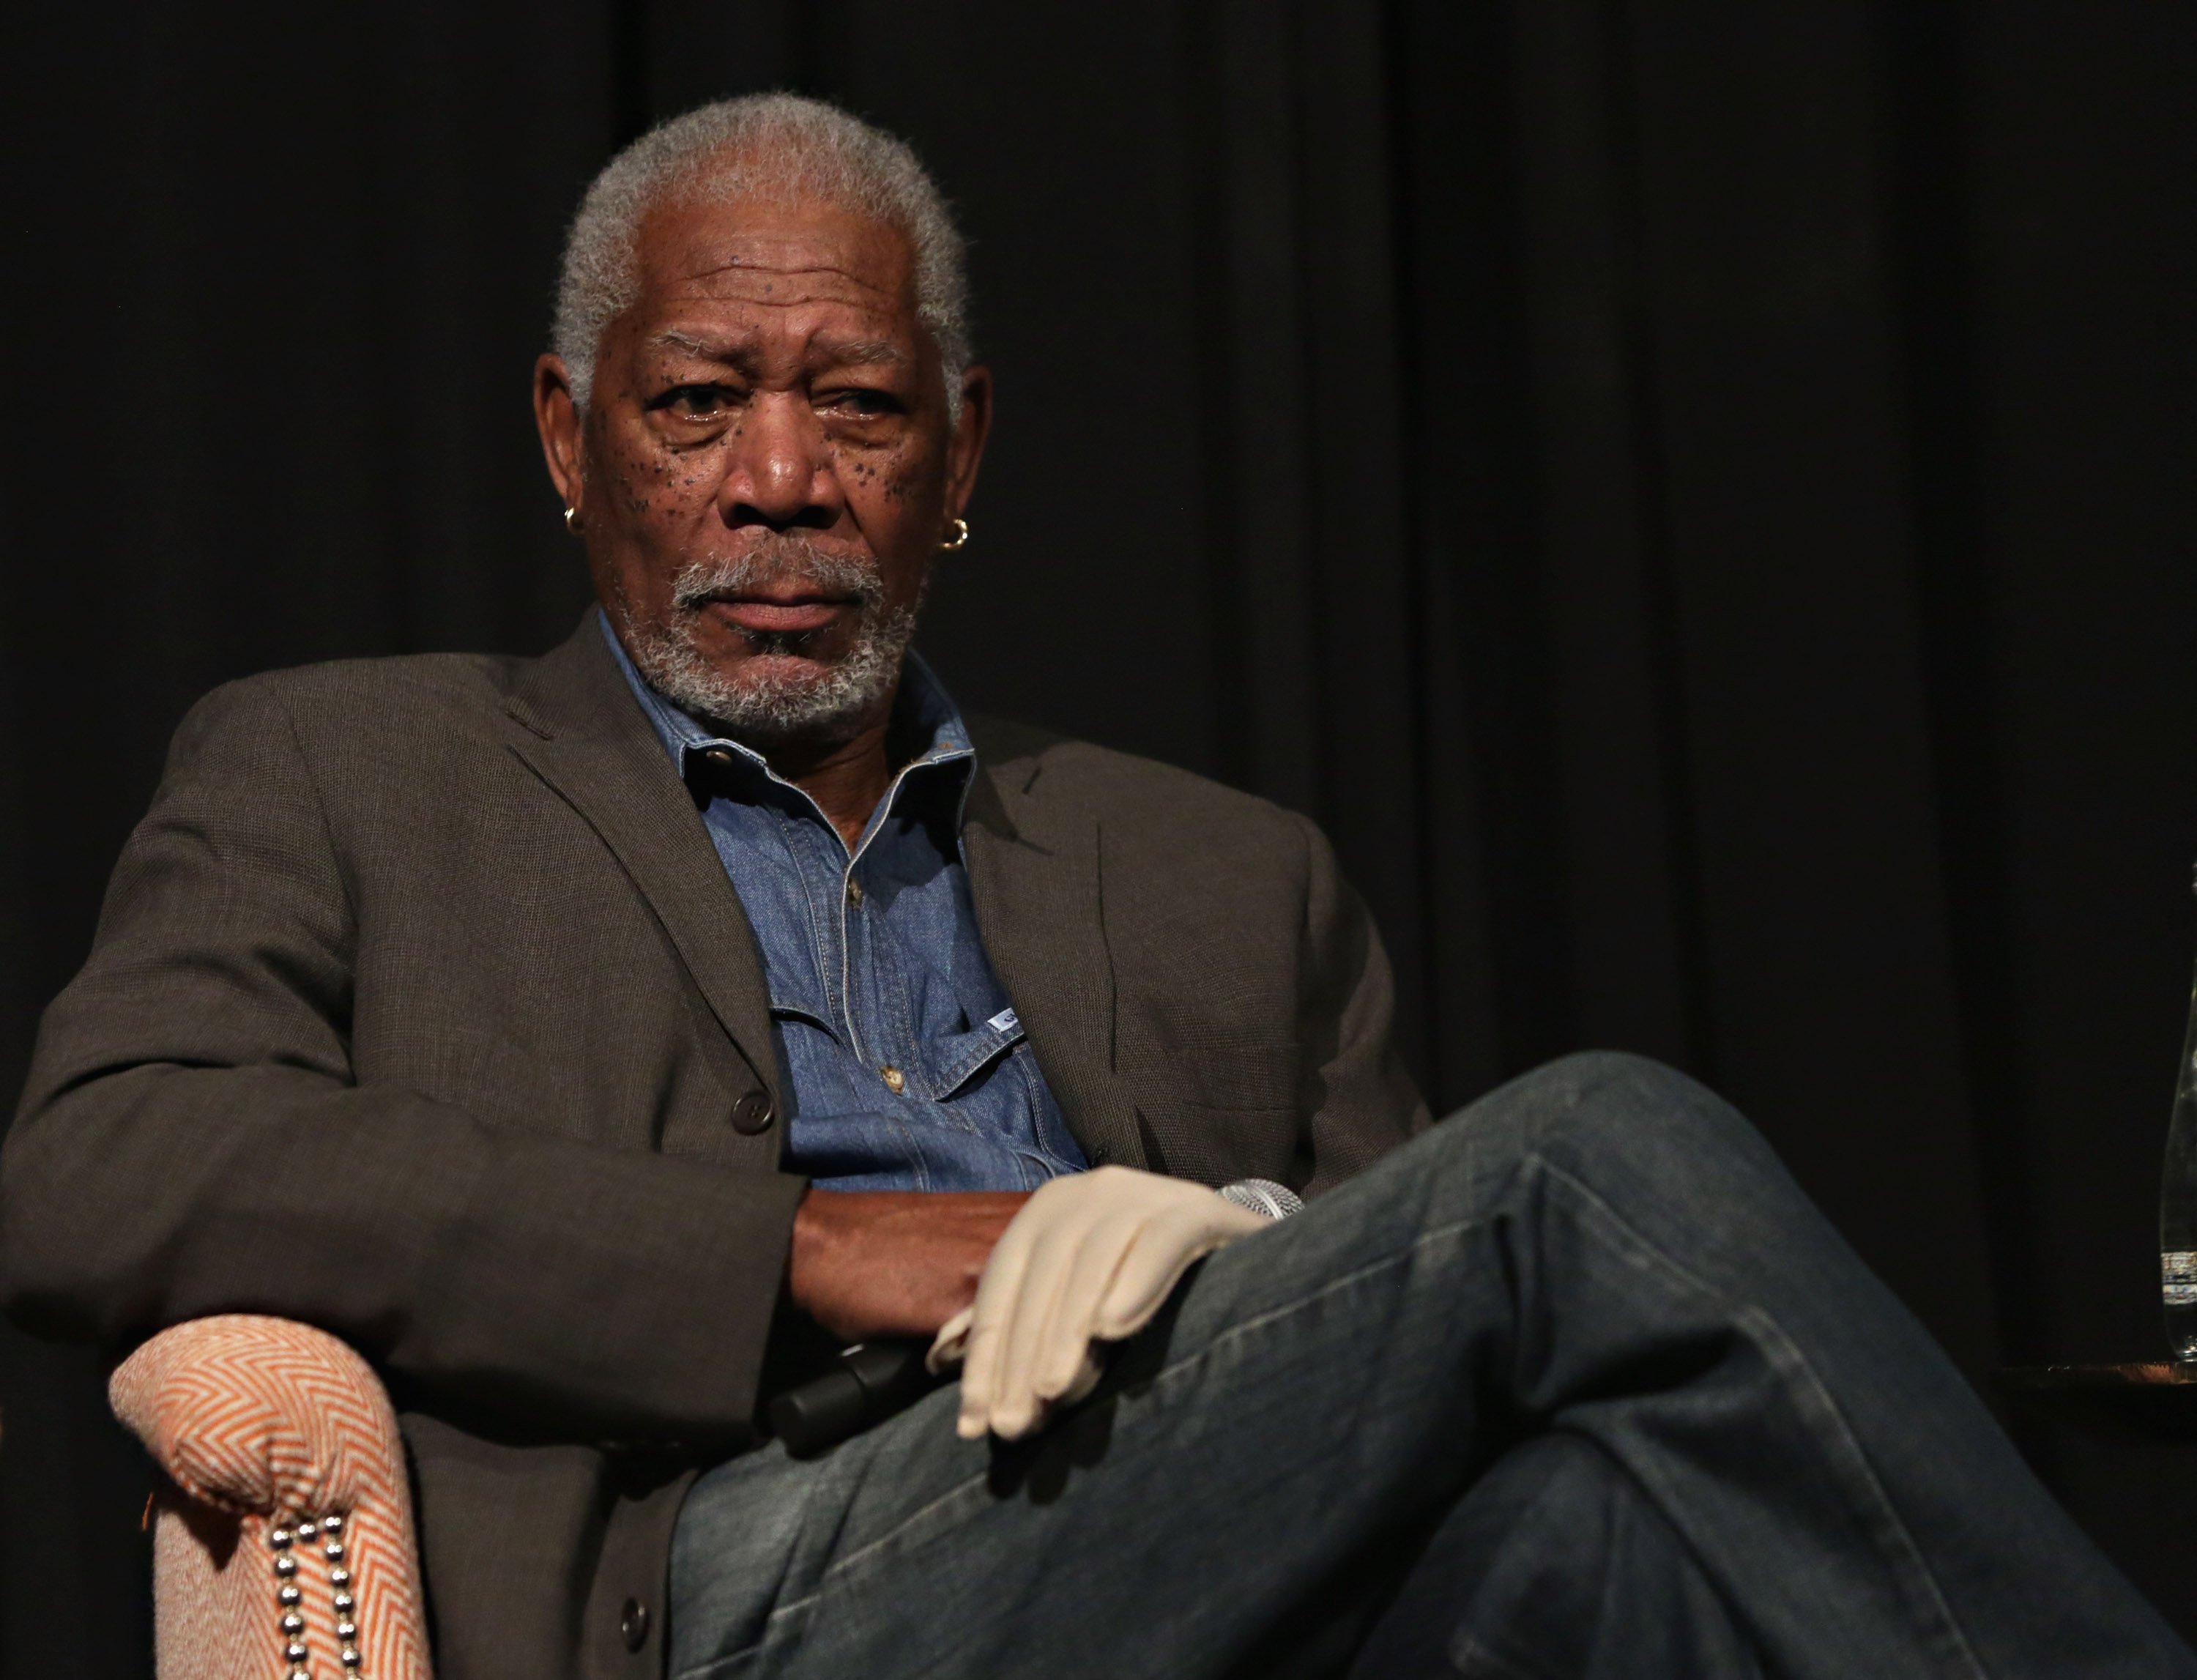 Morgan Freeman with his slain granddaughter | Getty Images